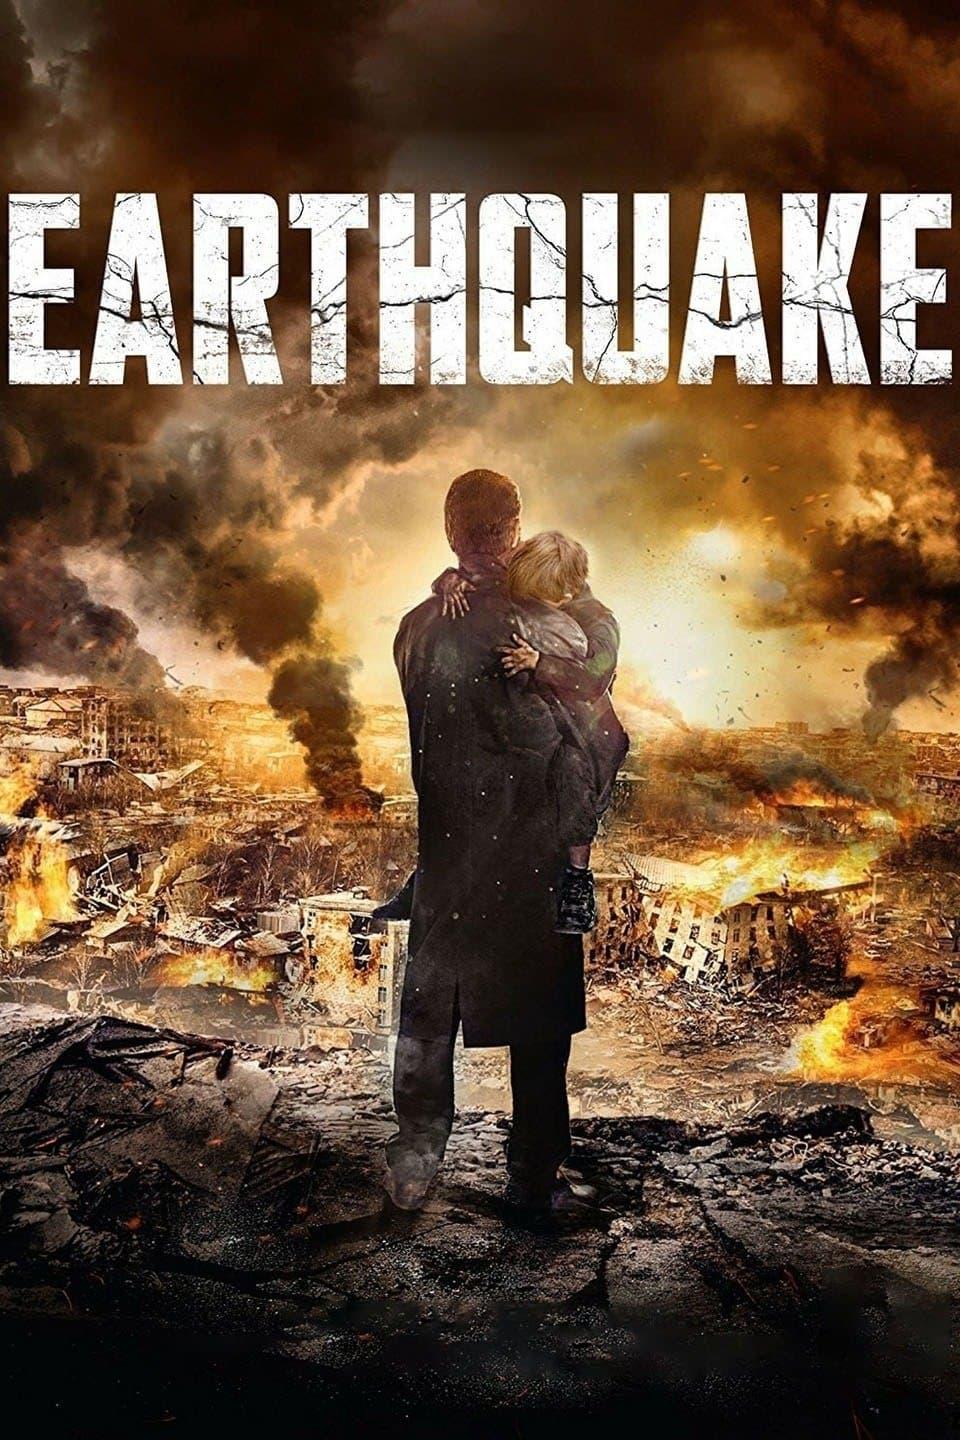 The Earthquake poster